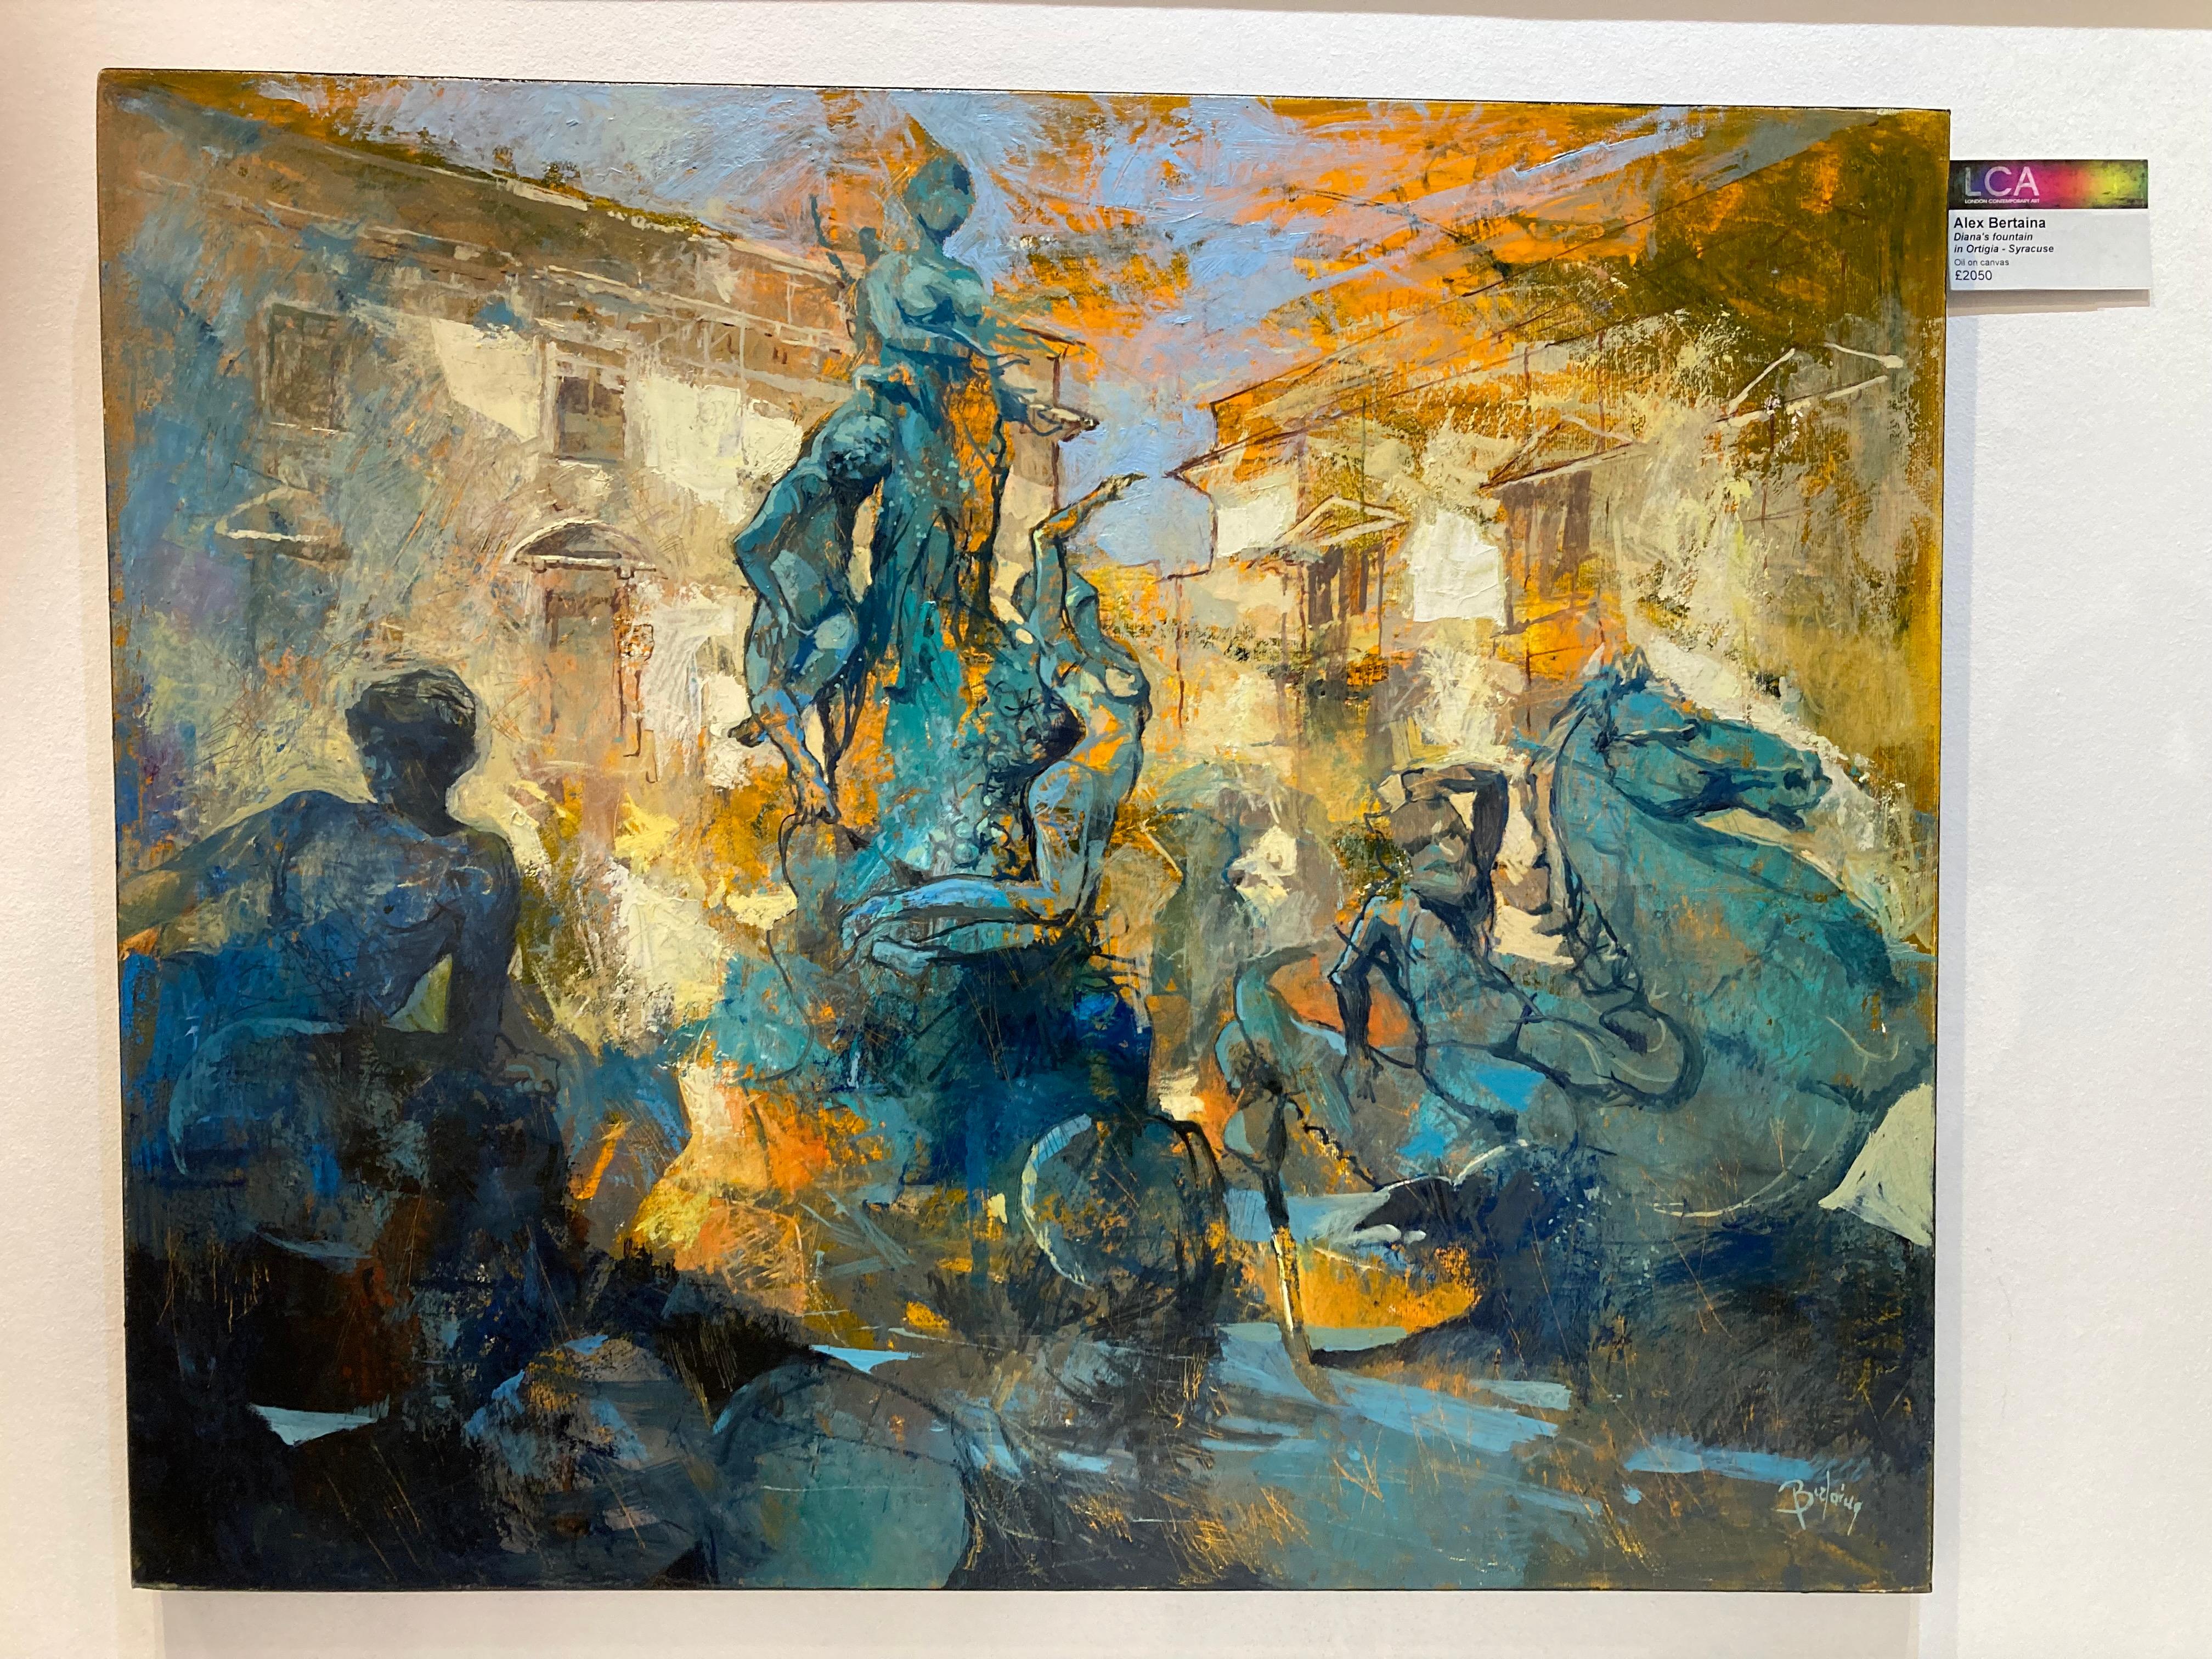 Aretusa la prediletta (Diana fountain in Ortigia - Syracuse) - Italian townscape - Painting by Alex Bertaina